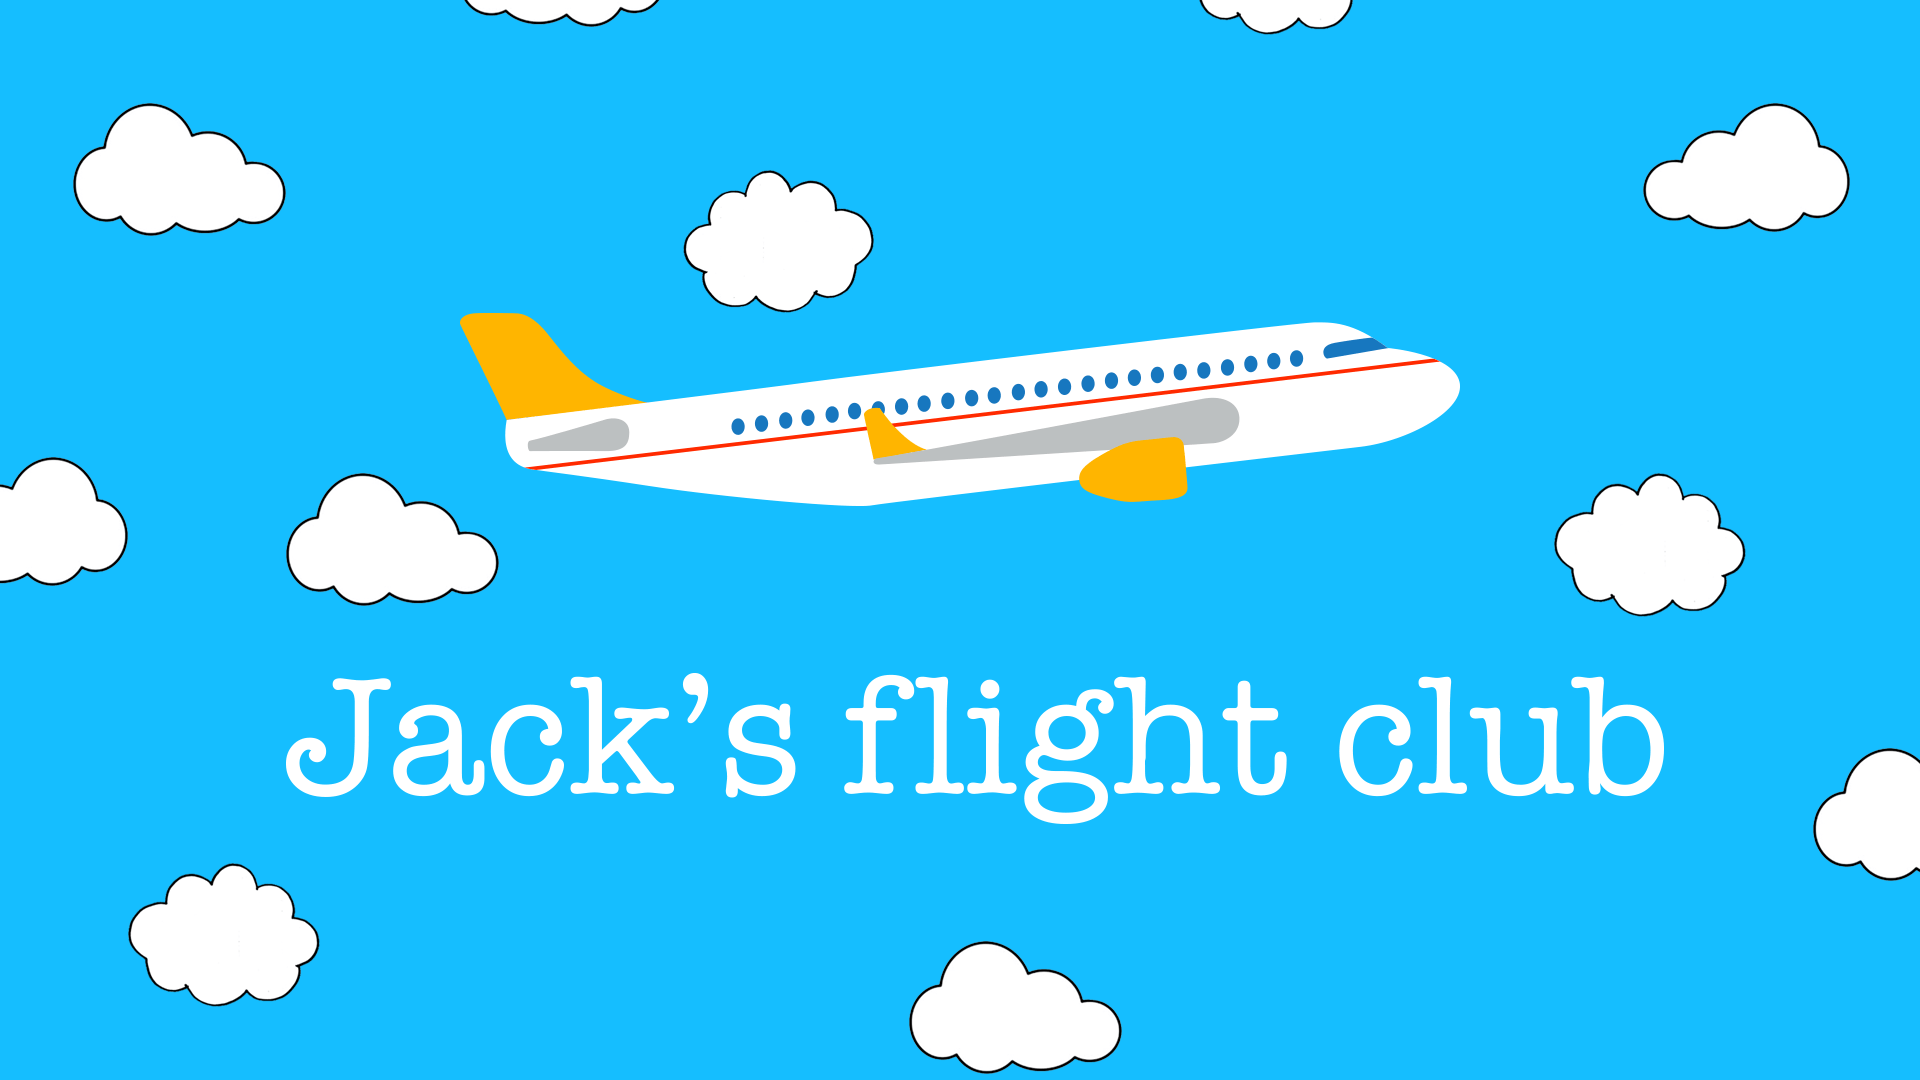 Flight Club Logo - Jack's Flight Club | Cheap Flights, Flight Deals & Alerts